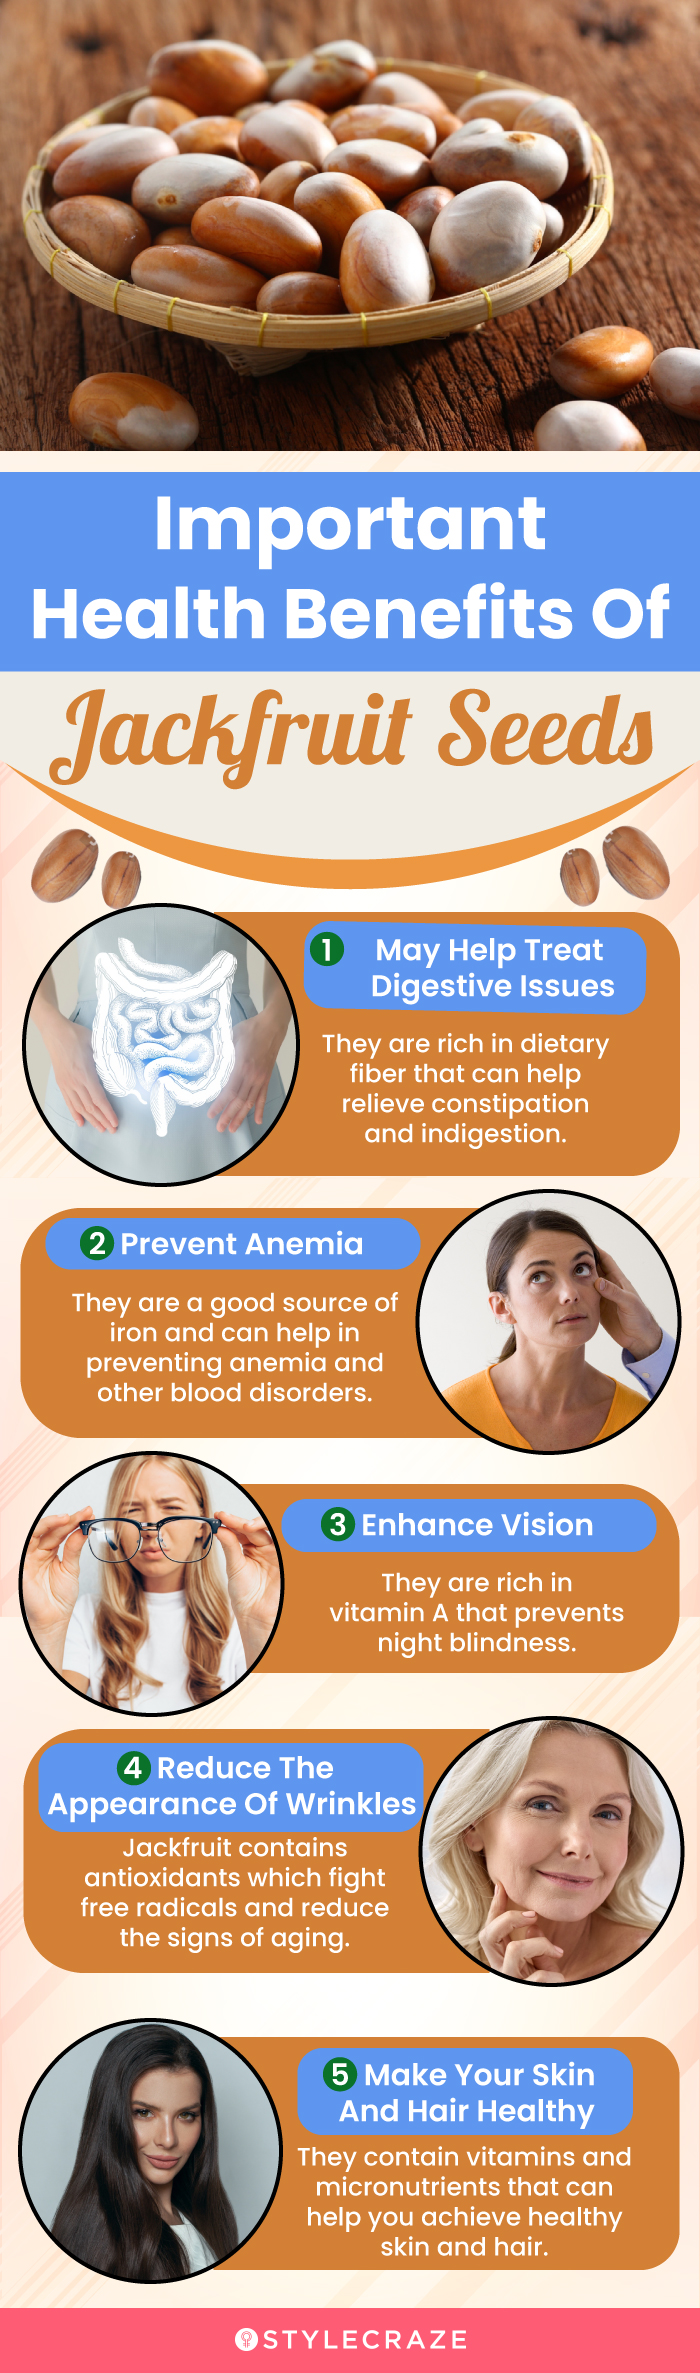 important health benefits of jackfruit seeds (infographic)